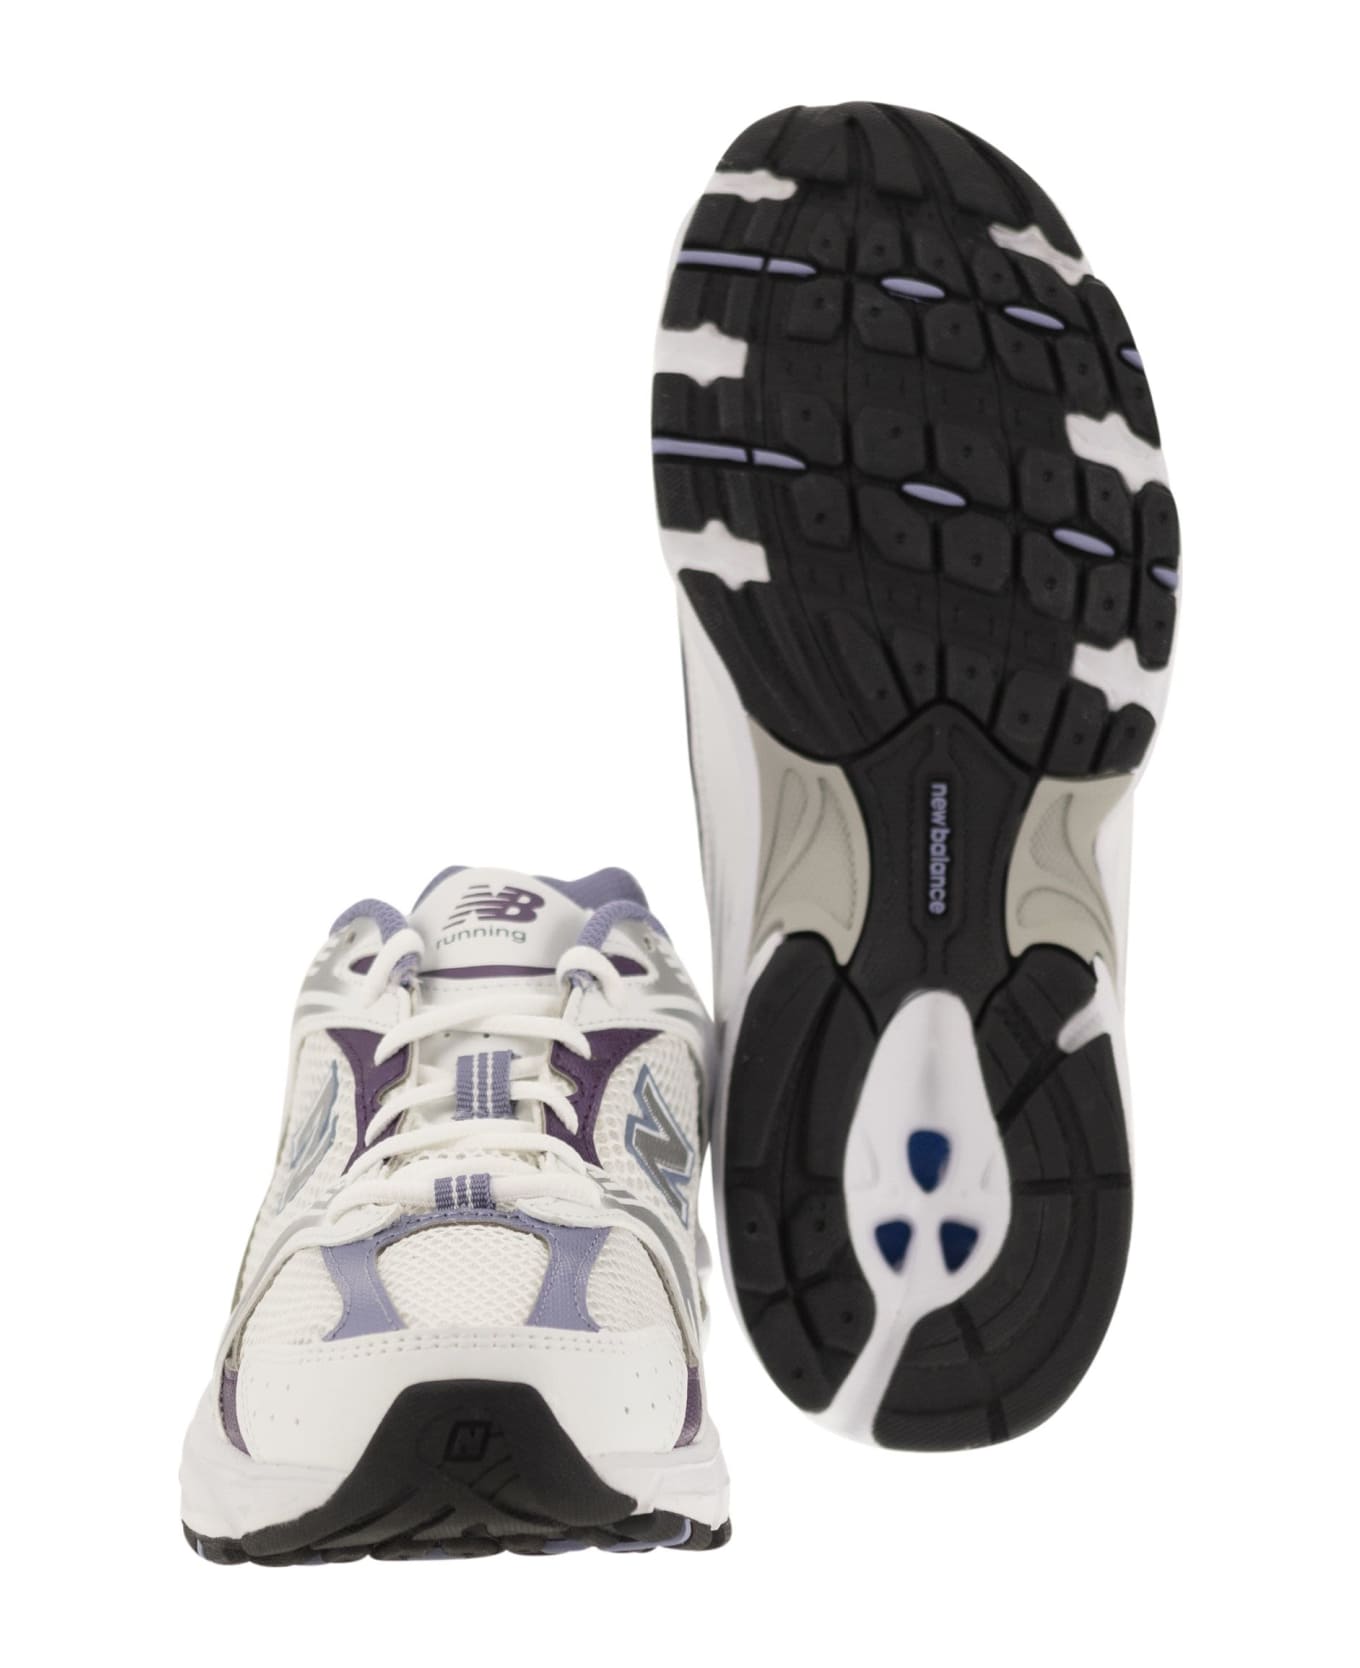 New Balance 530 - Sneakers Lifestyle - White/purple